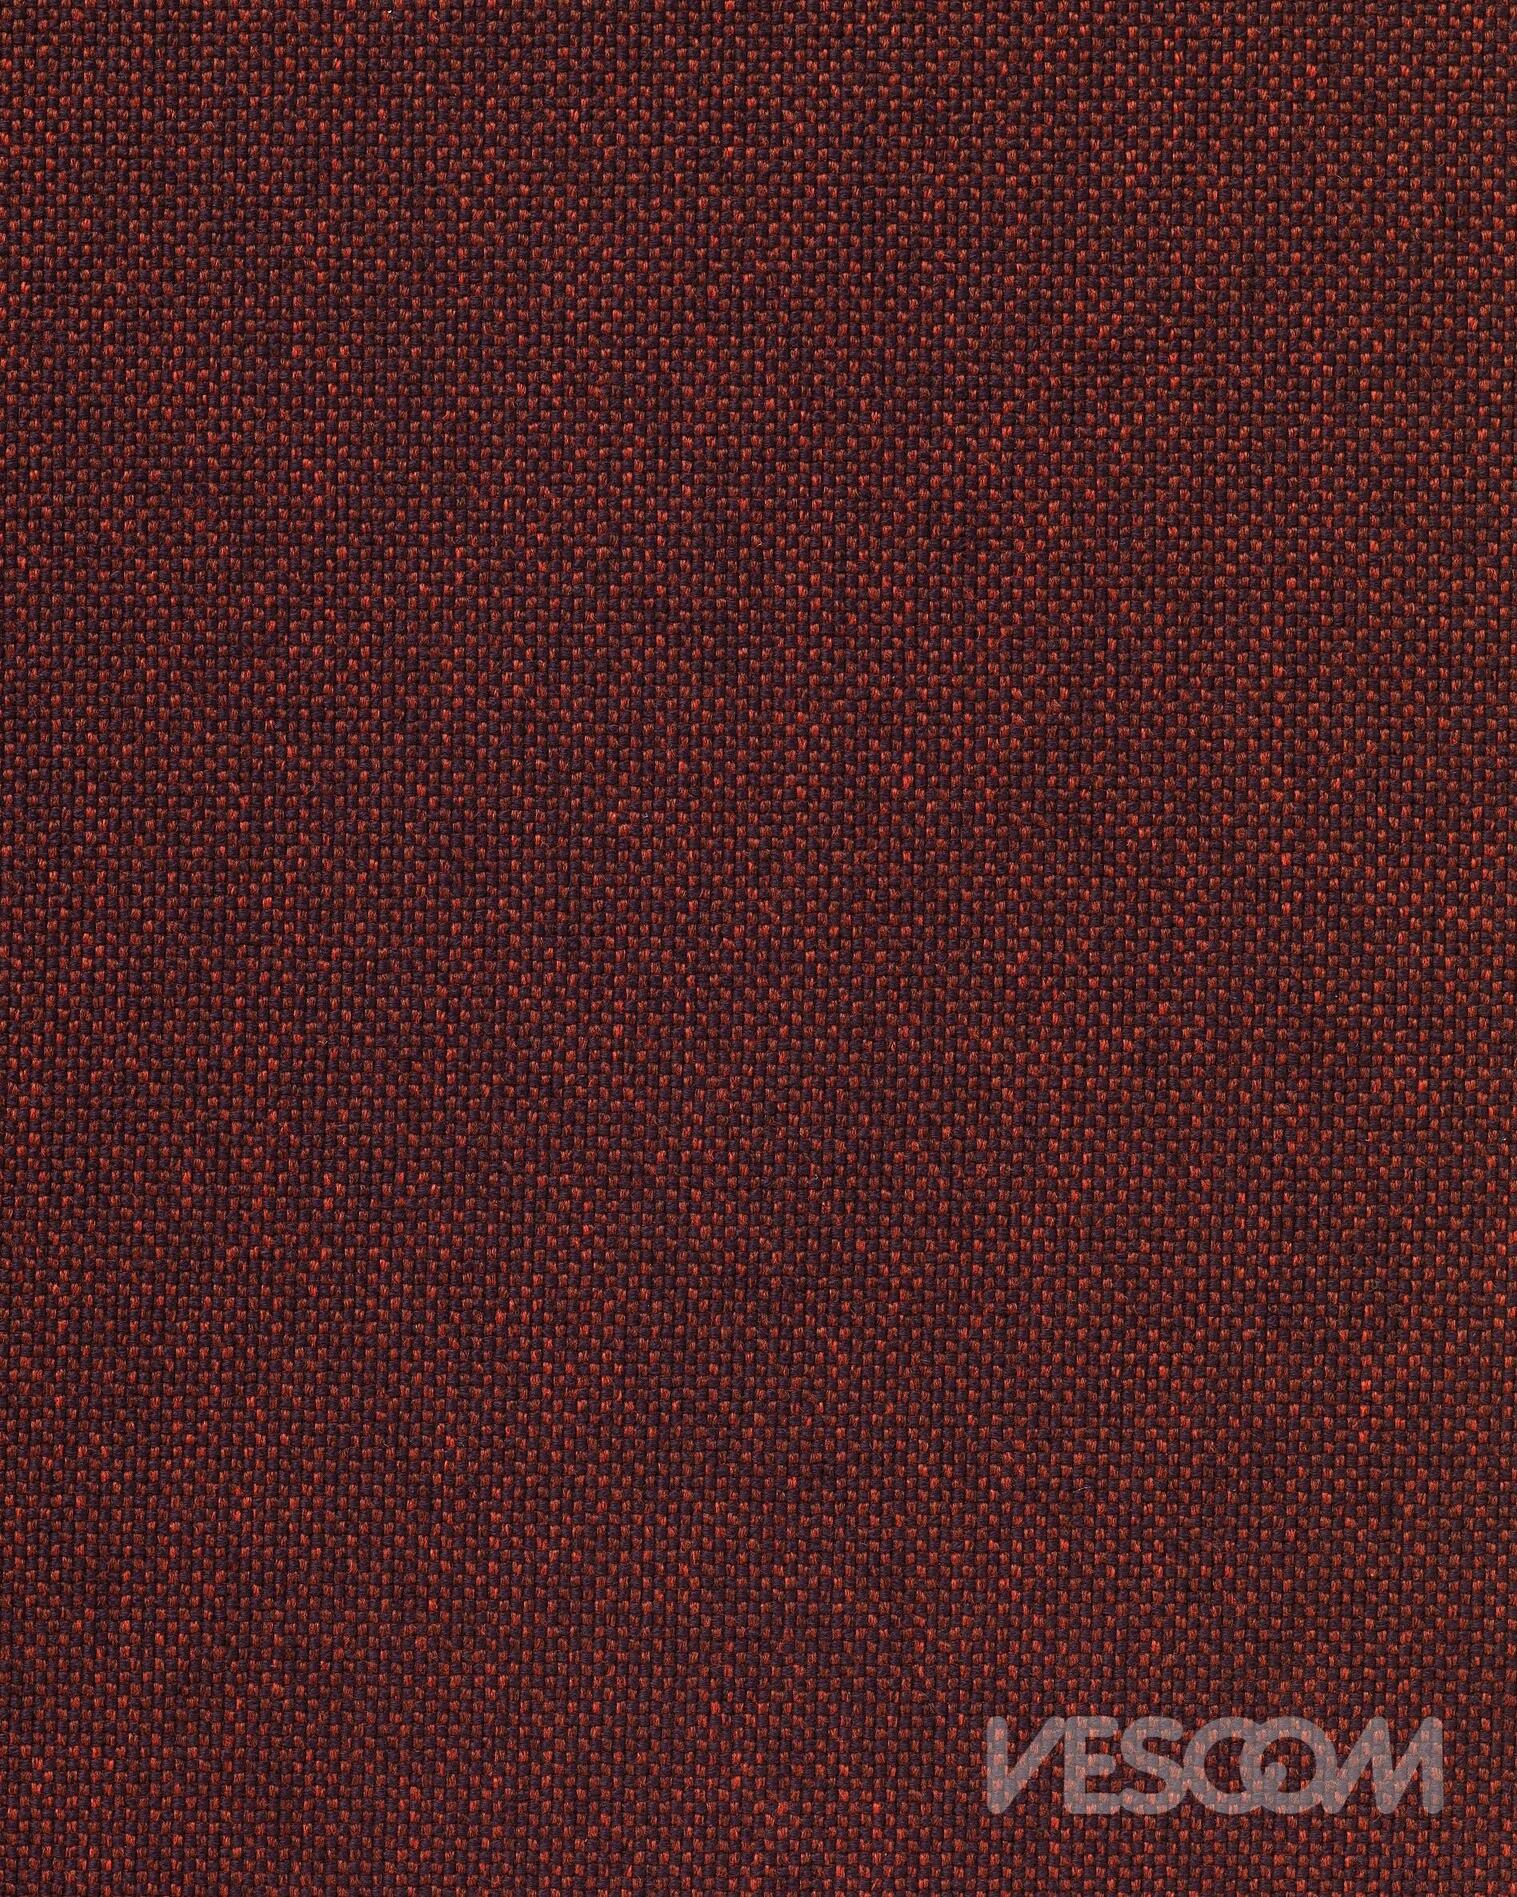 vescom-acton-upholstery-fabric-7062-06